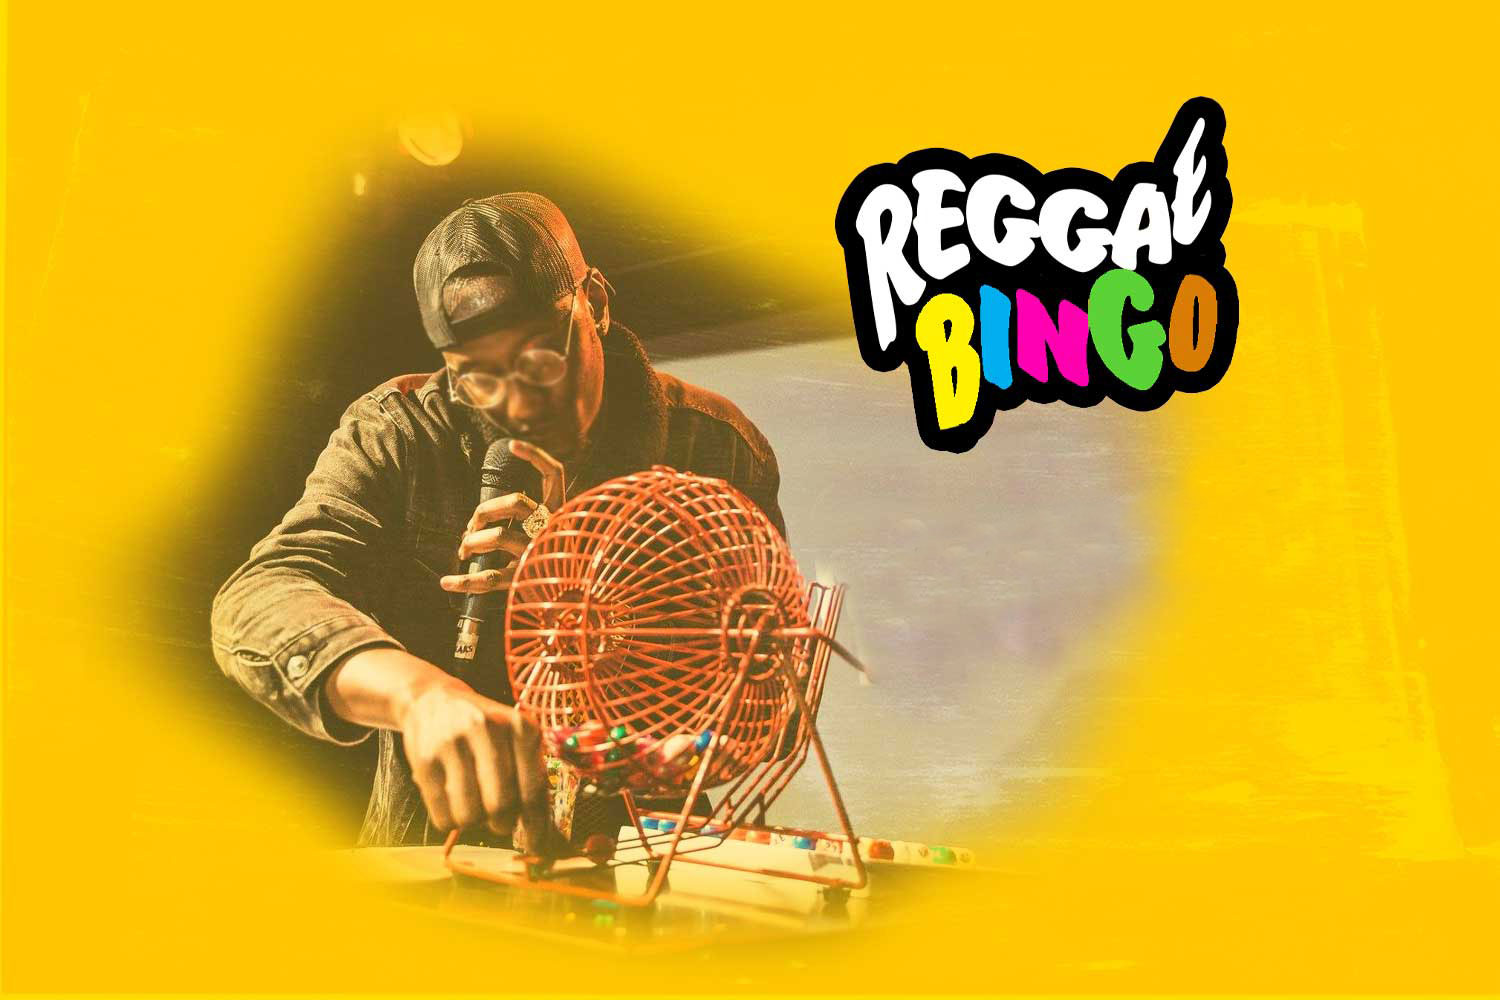 Friday, 10th June 2022 - Reggae Bingo